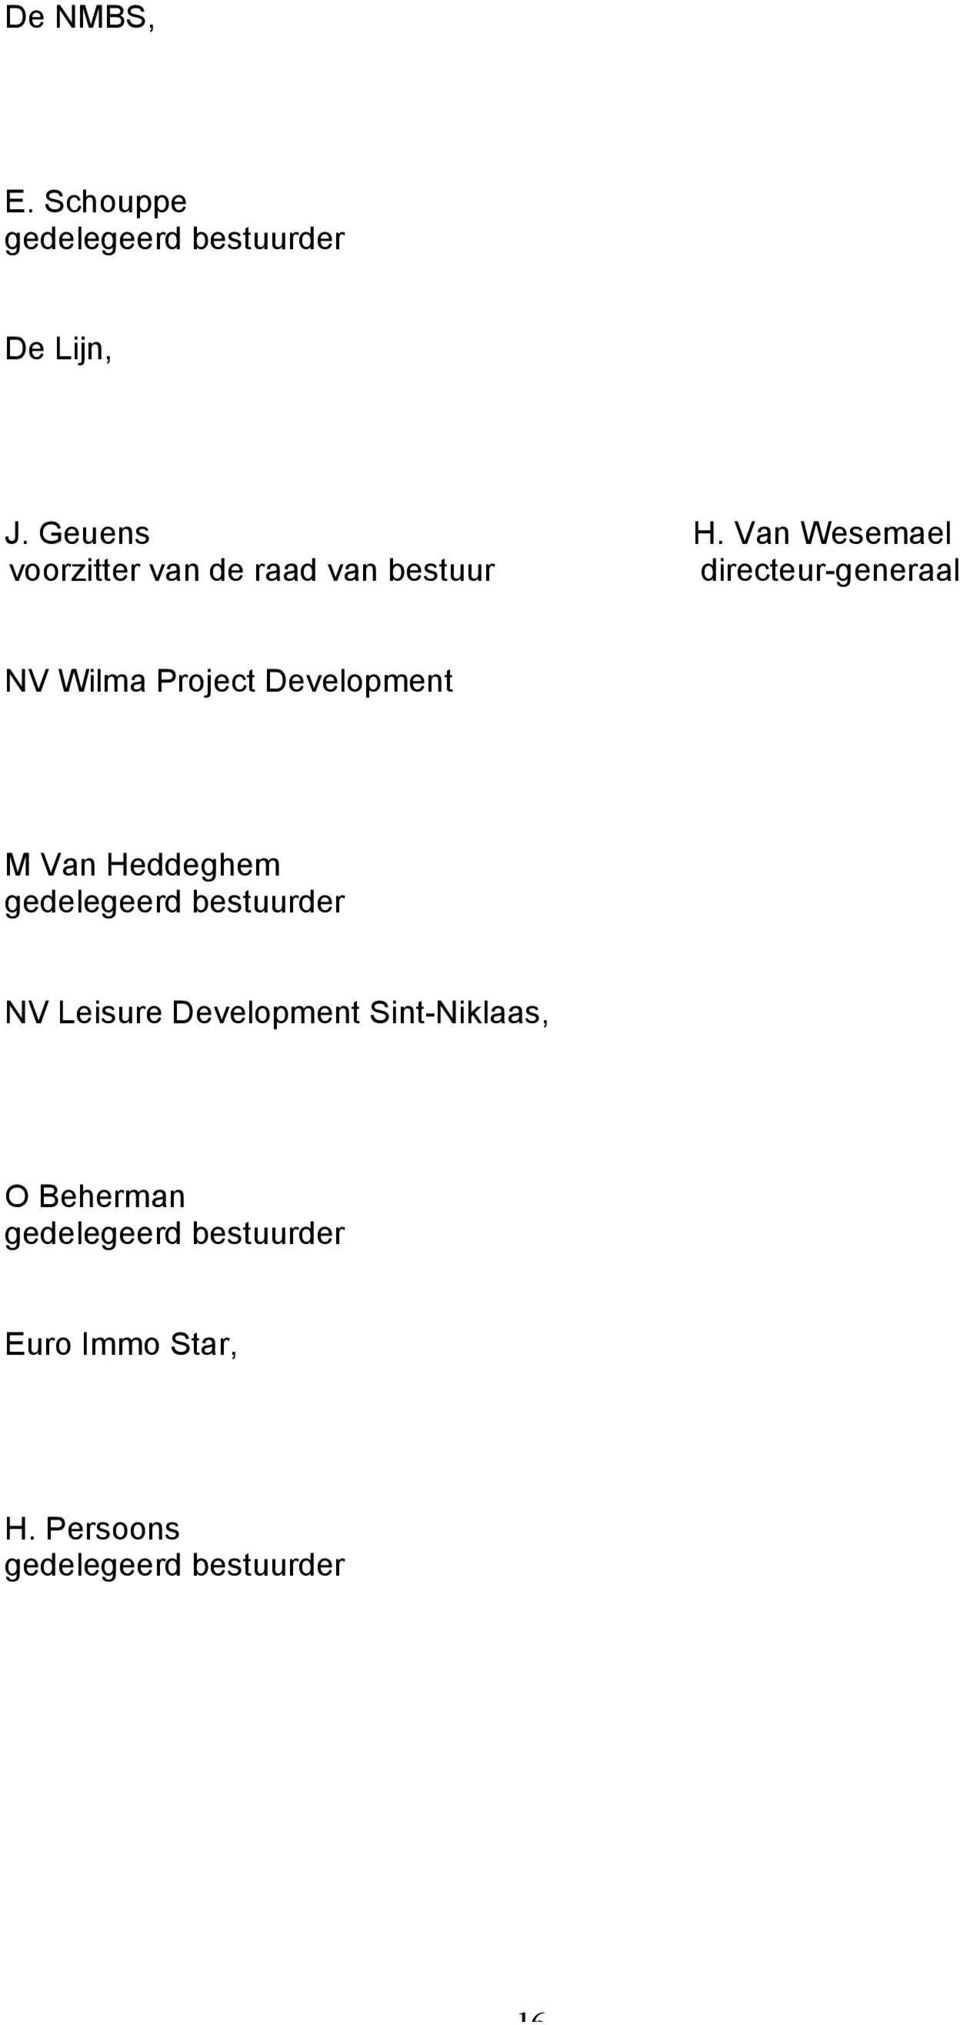 Project Development M Van Heddeghem gedelegeerd bestuurder NV Leisure Development